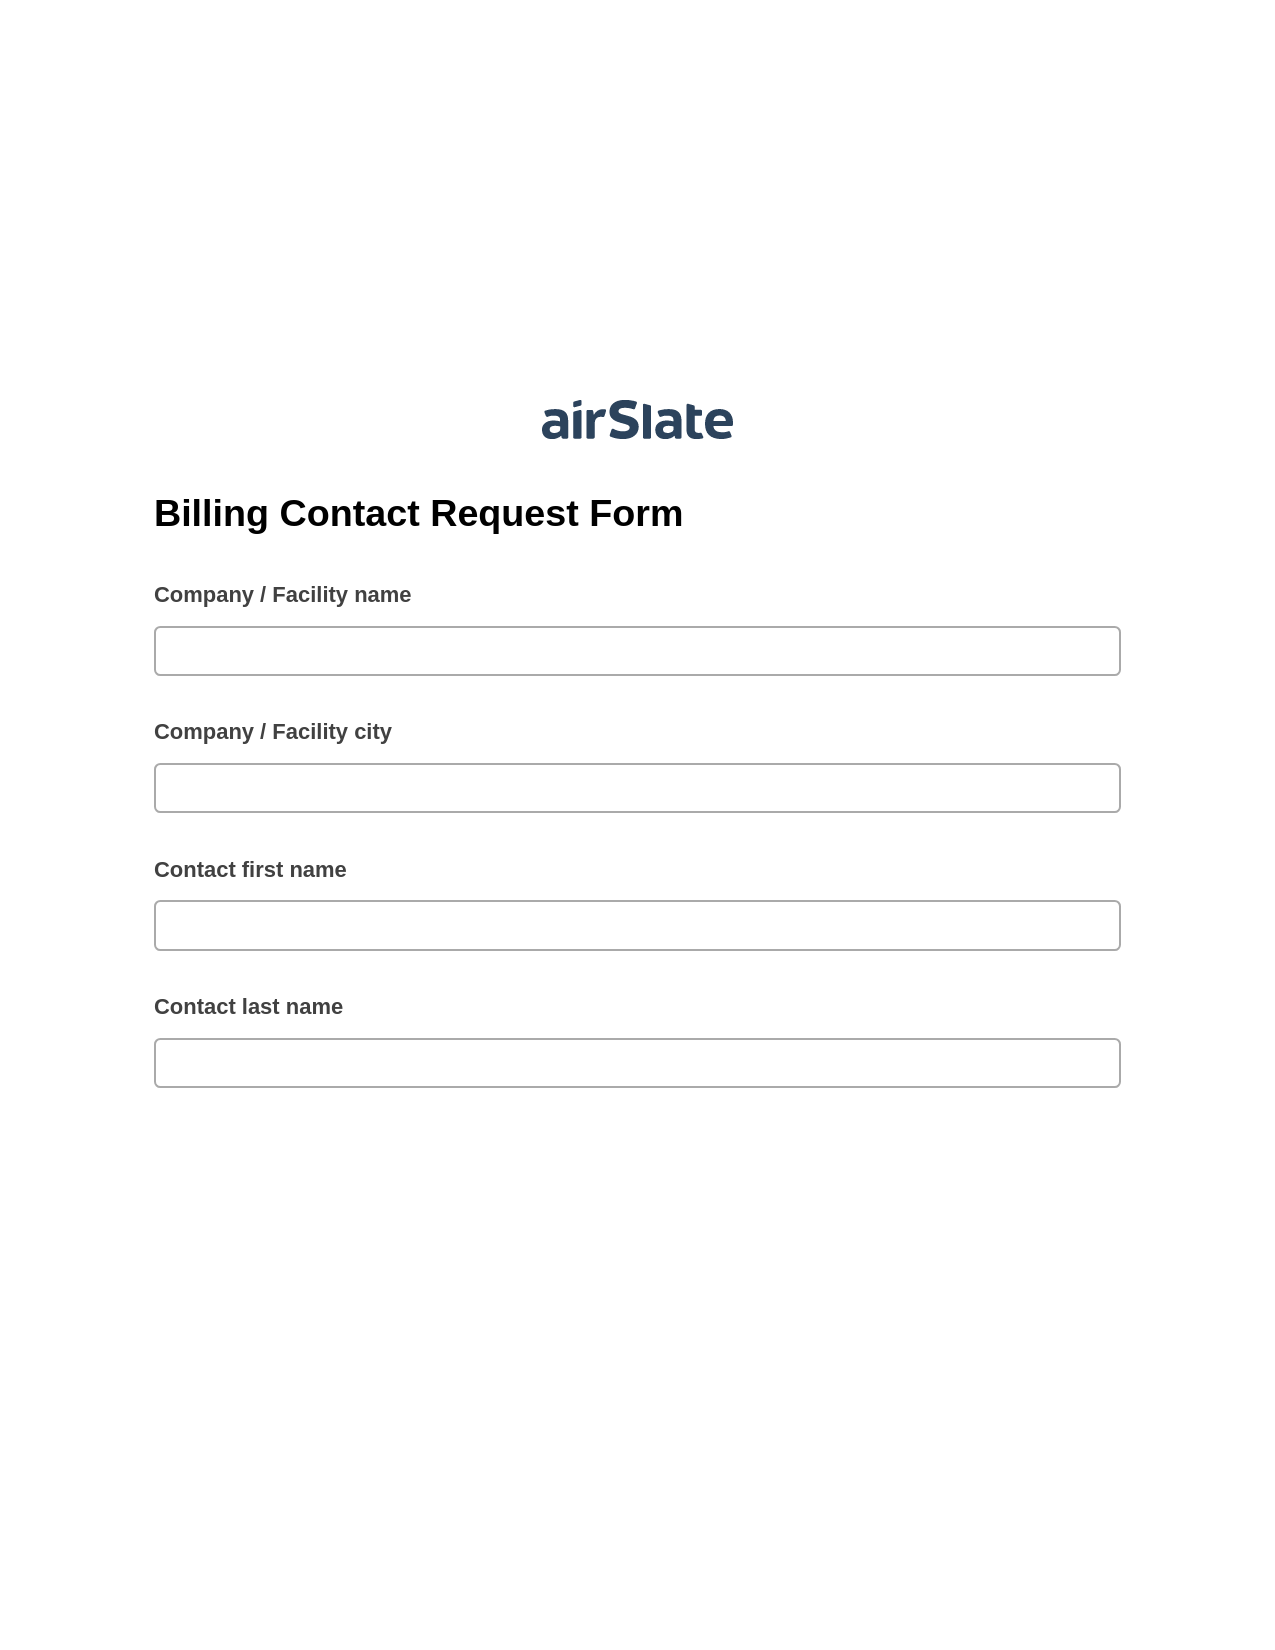 Billing Contact Request Form Pre-fill Dropdowns from MySQL Bot, Invoke Salesforce Process Bot, Export to Google Sheet Bot